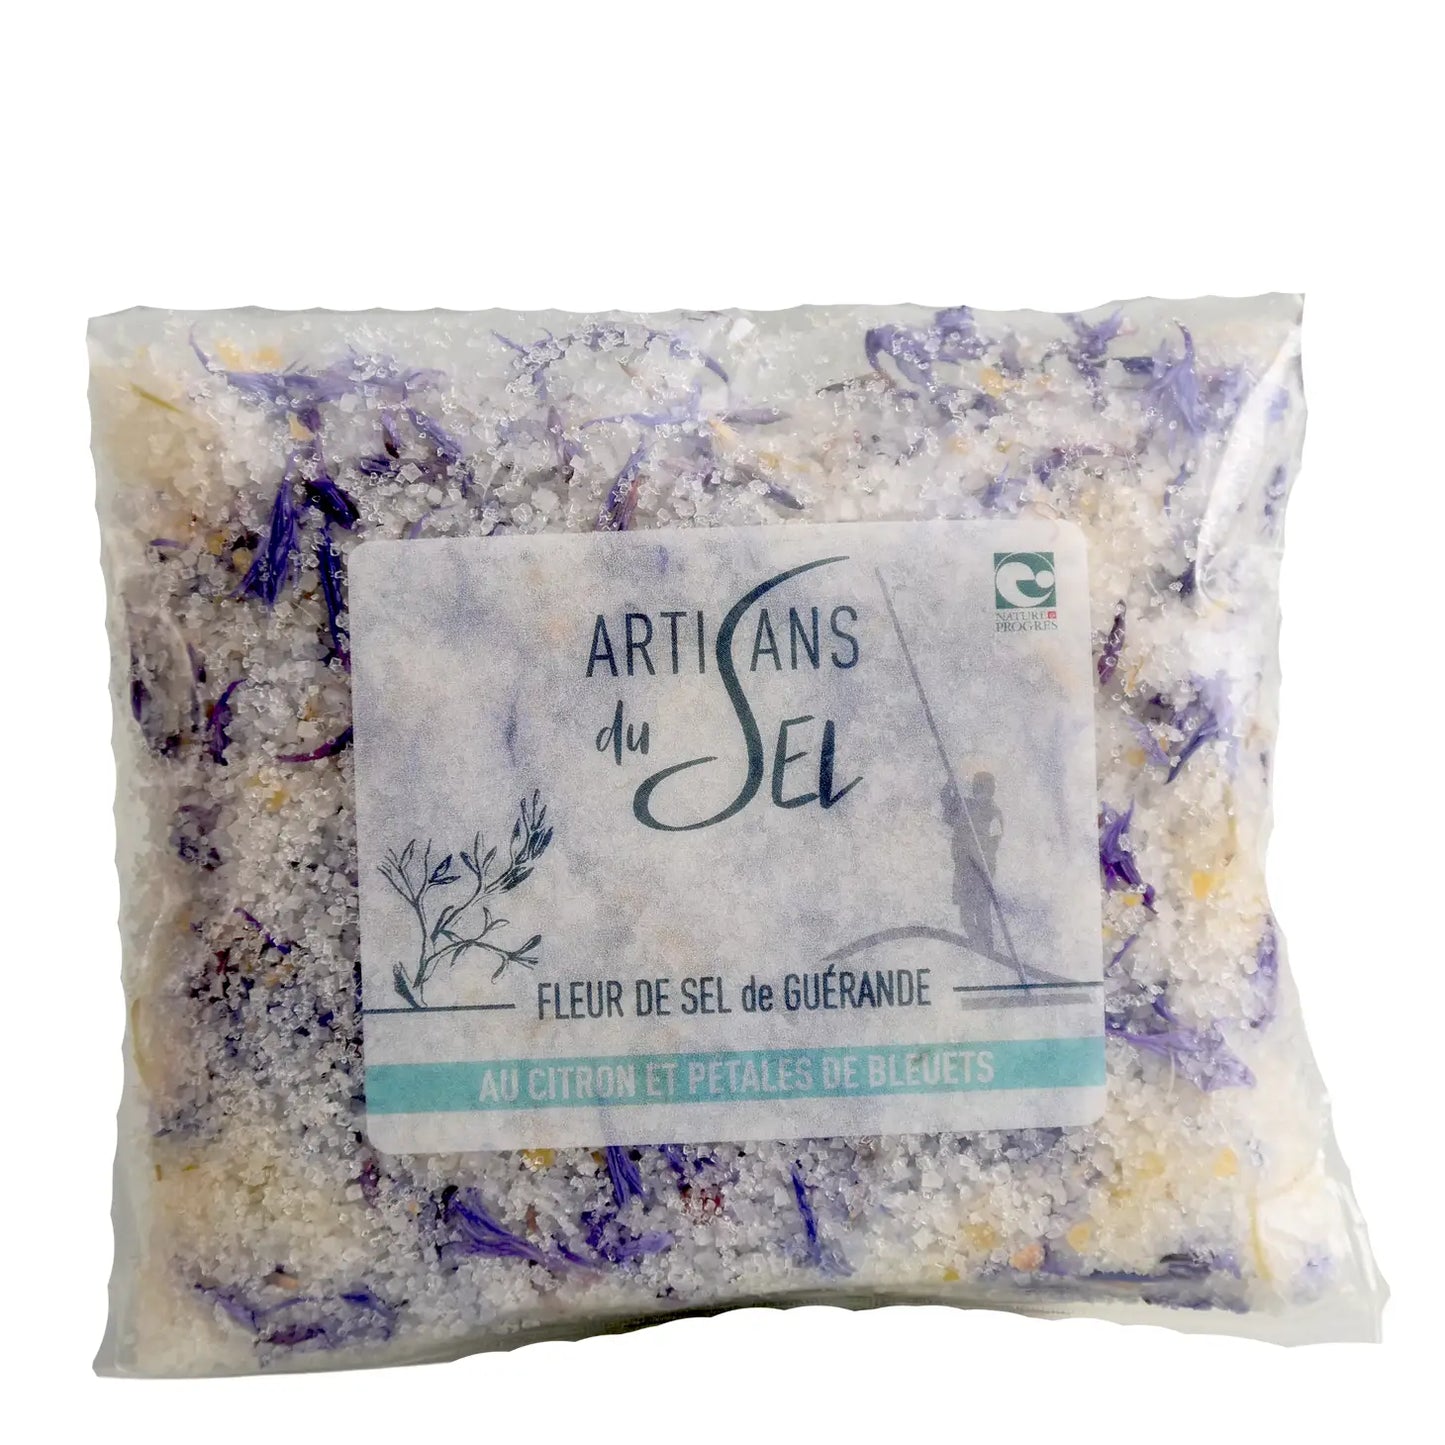 Celtic Grey Salt with Blueberry Flower Petals and Lemon